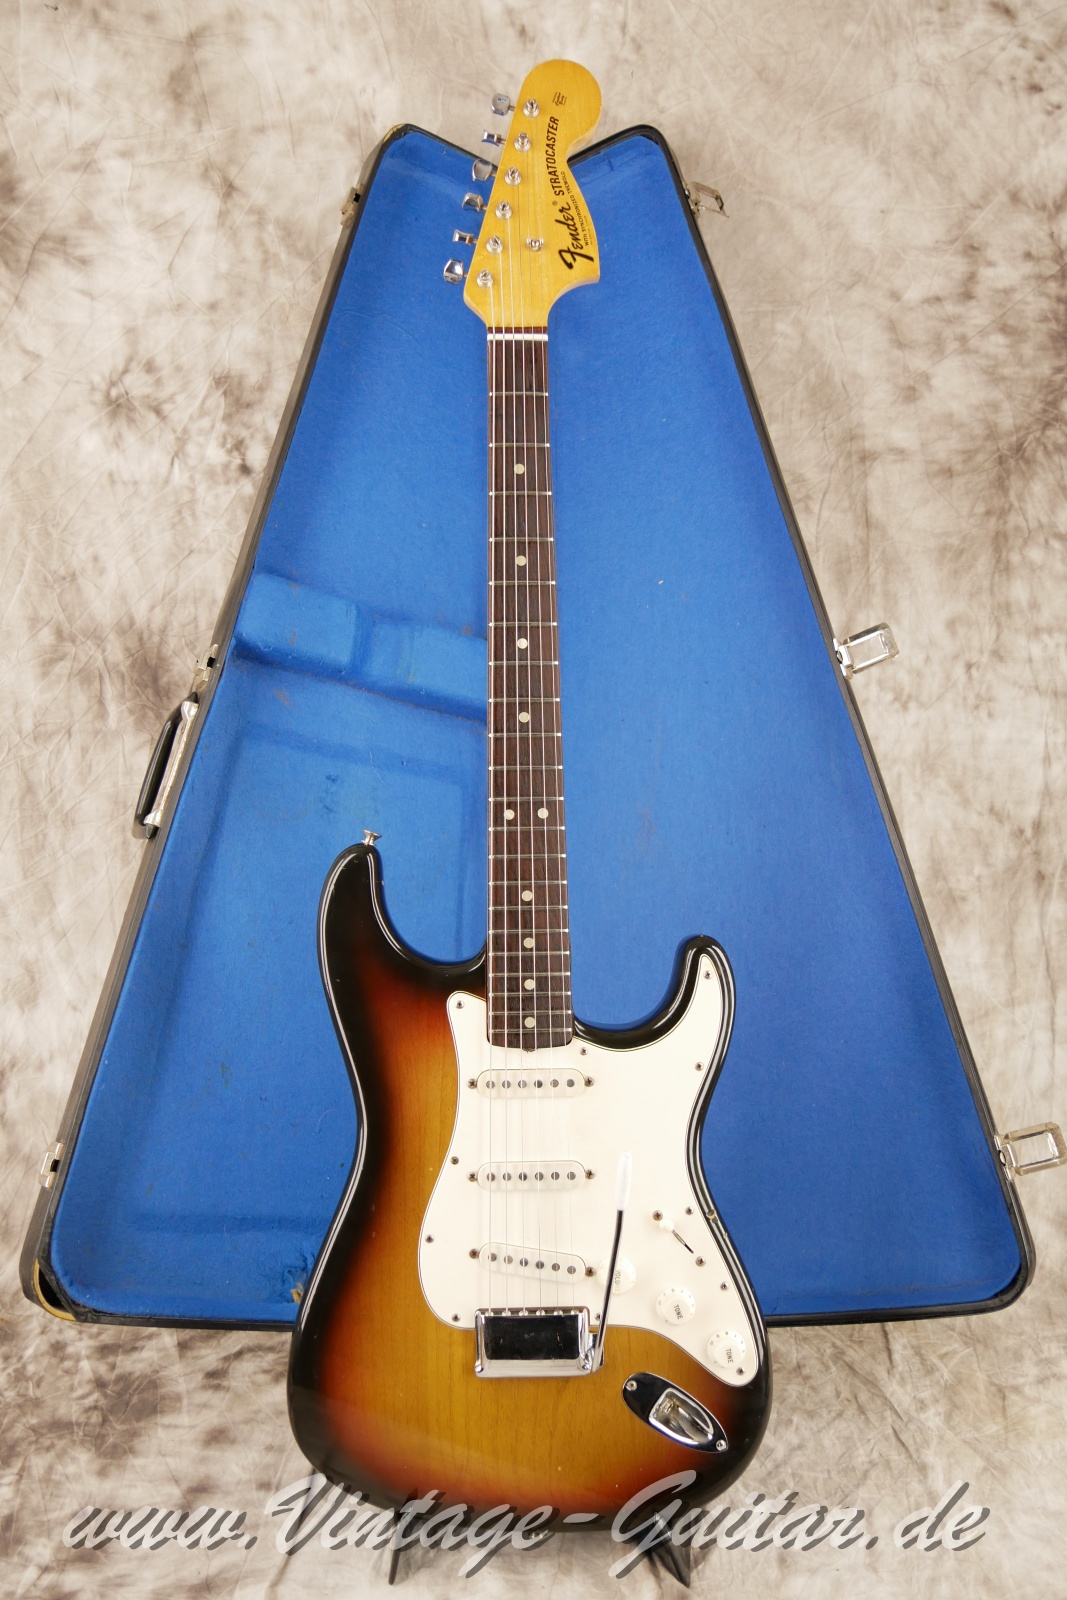 Fender_Startocaster_Baujahr_1971_USA_sunburst_all_original-028.JPG